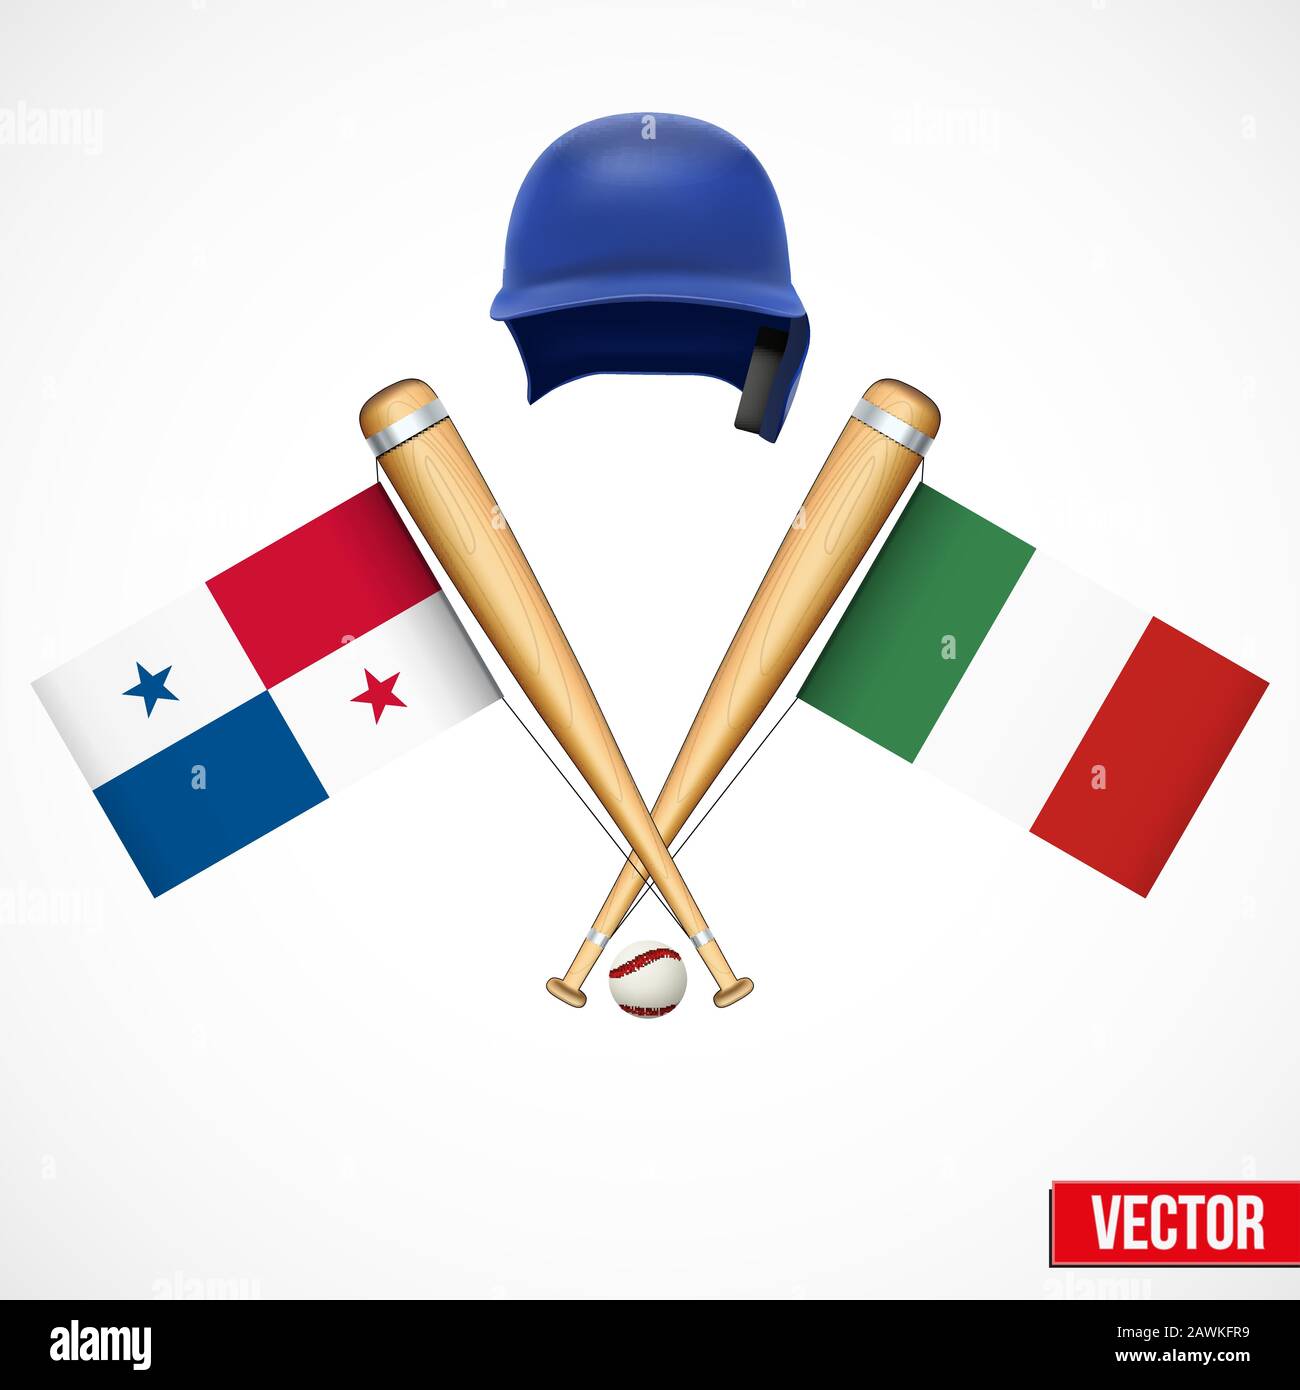 Symbols of Baseball team Panama and Mexico. Stock Vector